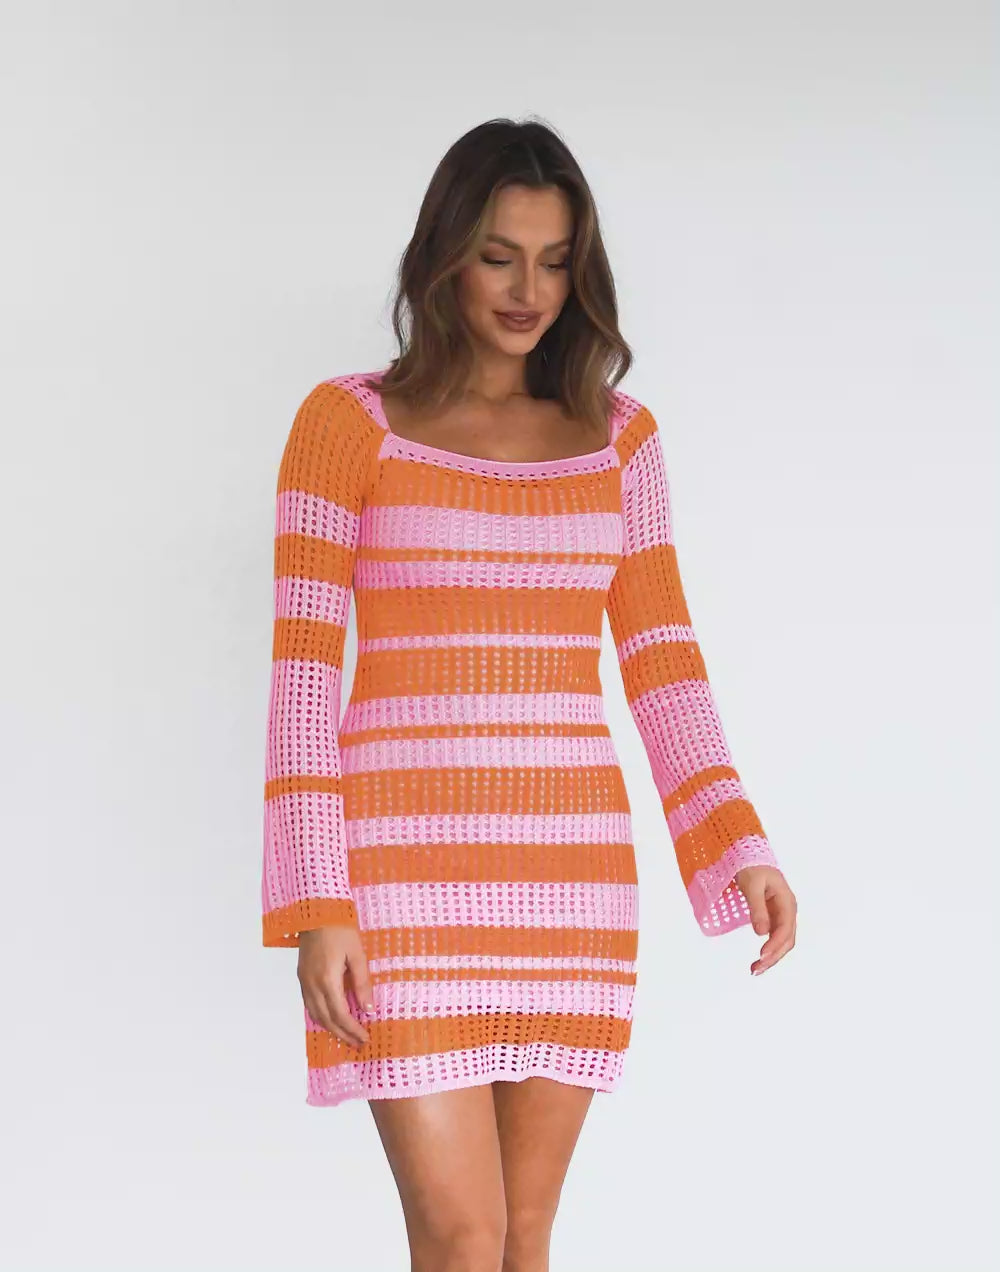 Marley Knit Mini Dress (Pink/Orange)